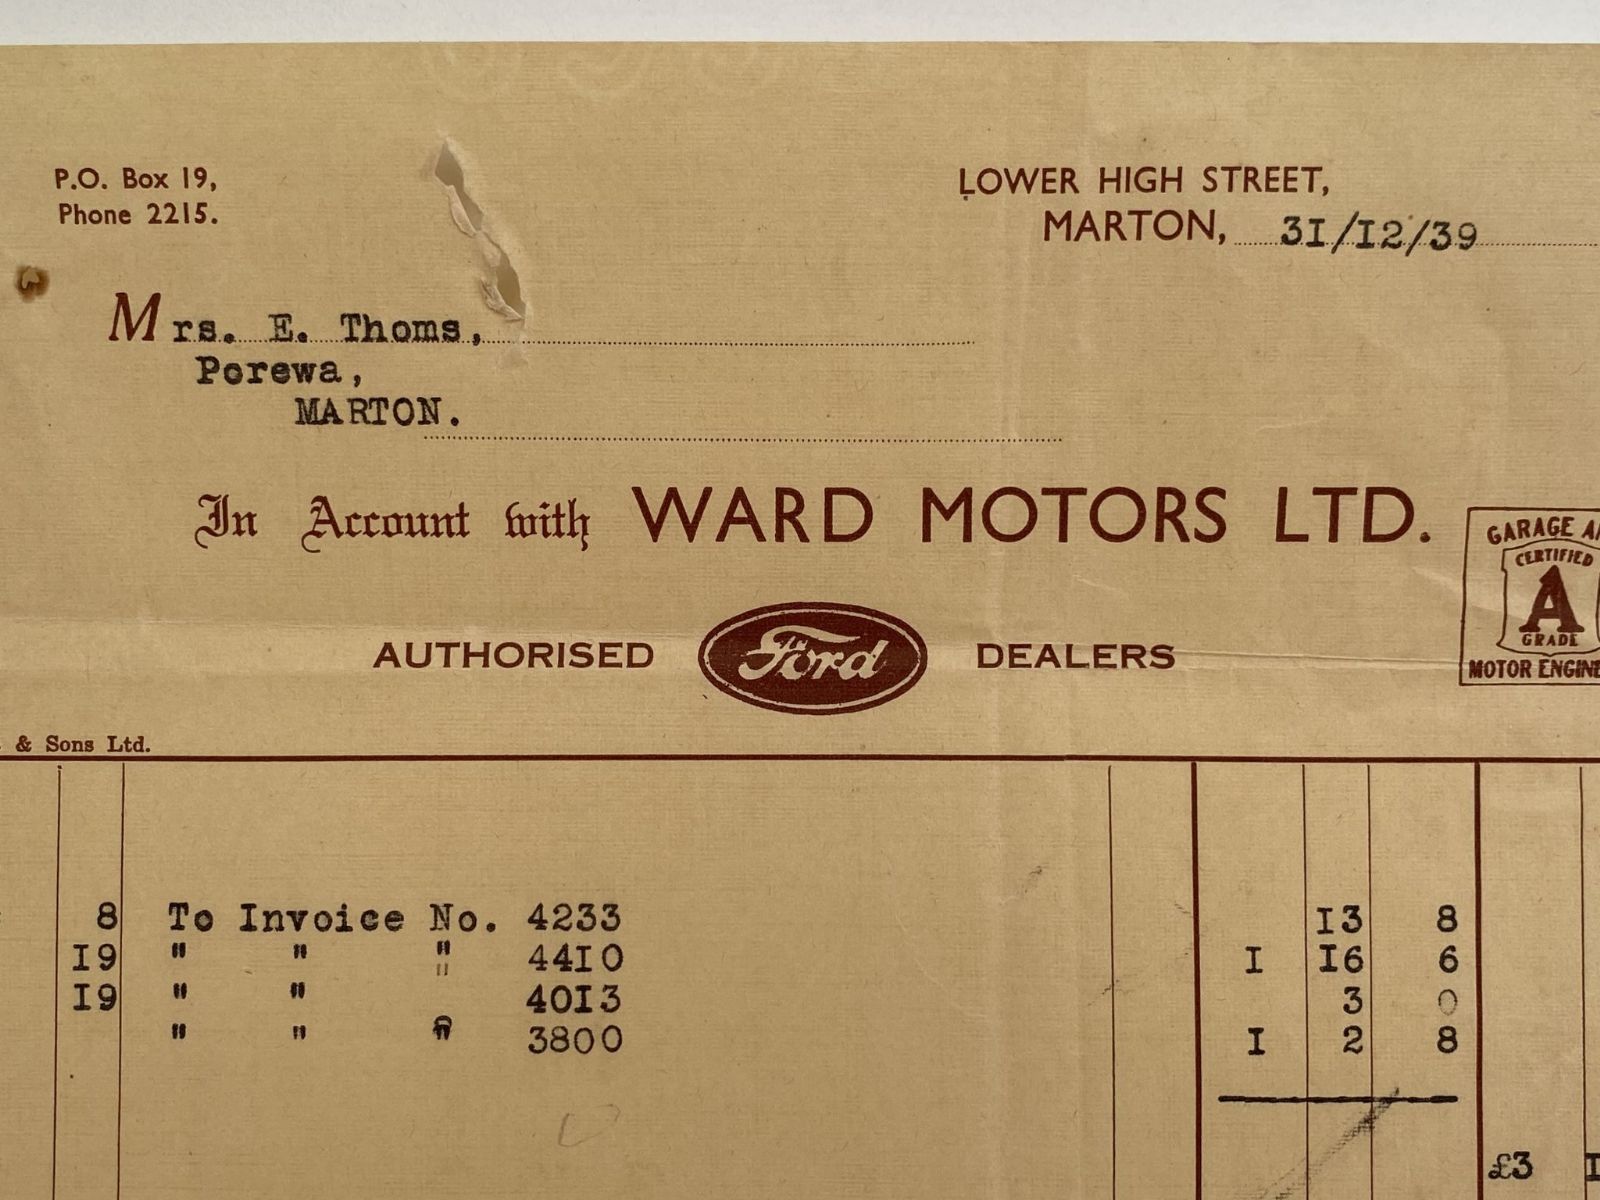 OLD INVOICE / RECEIPT: from Ward Motors Ltd - Ford Dealers. Marton 1939